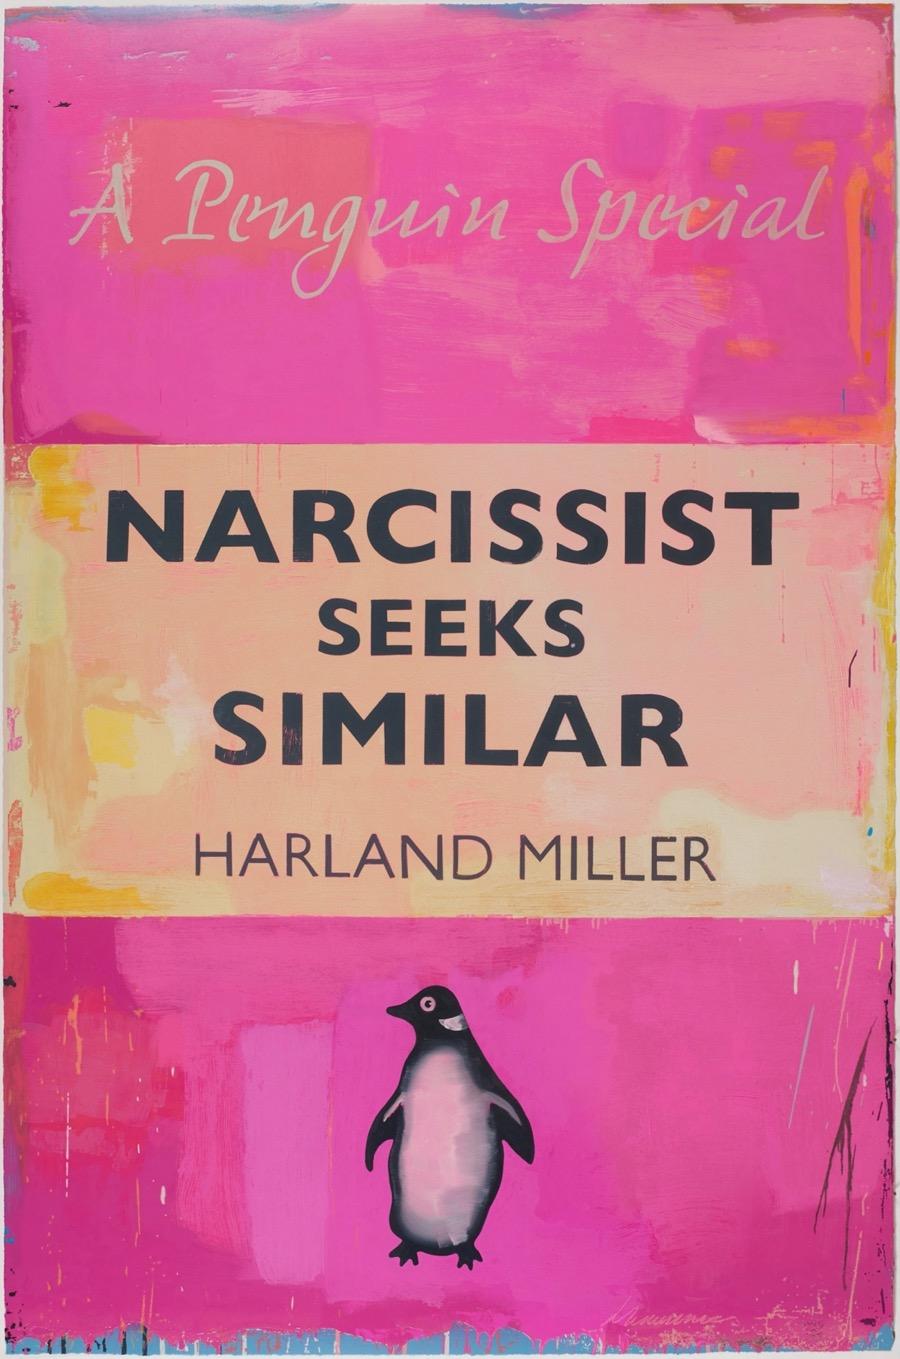 Narcissist Seeks Similar - Print by Harland Miller